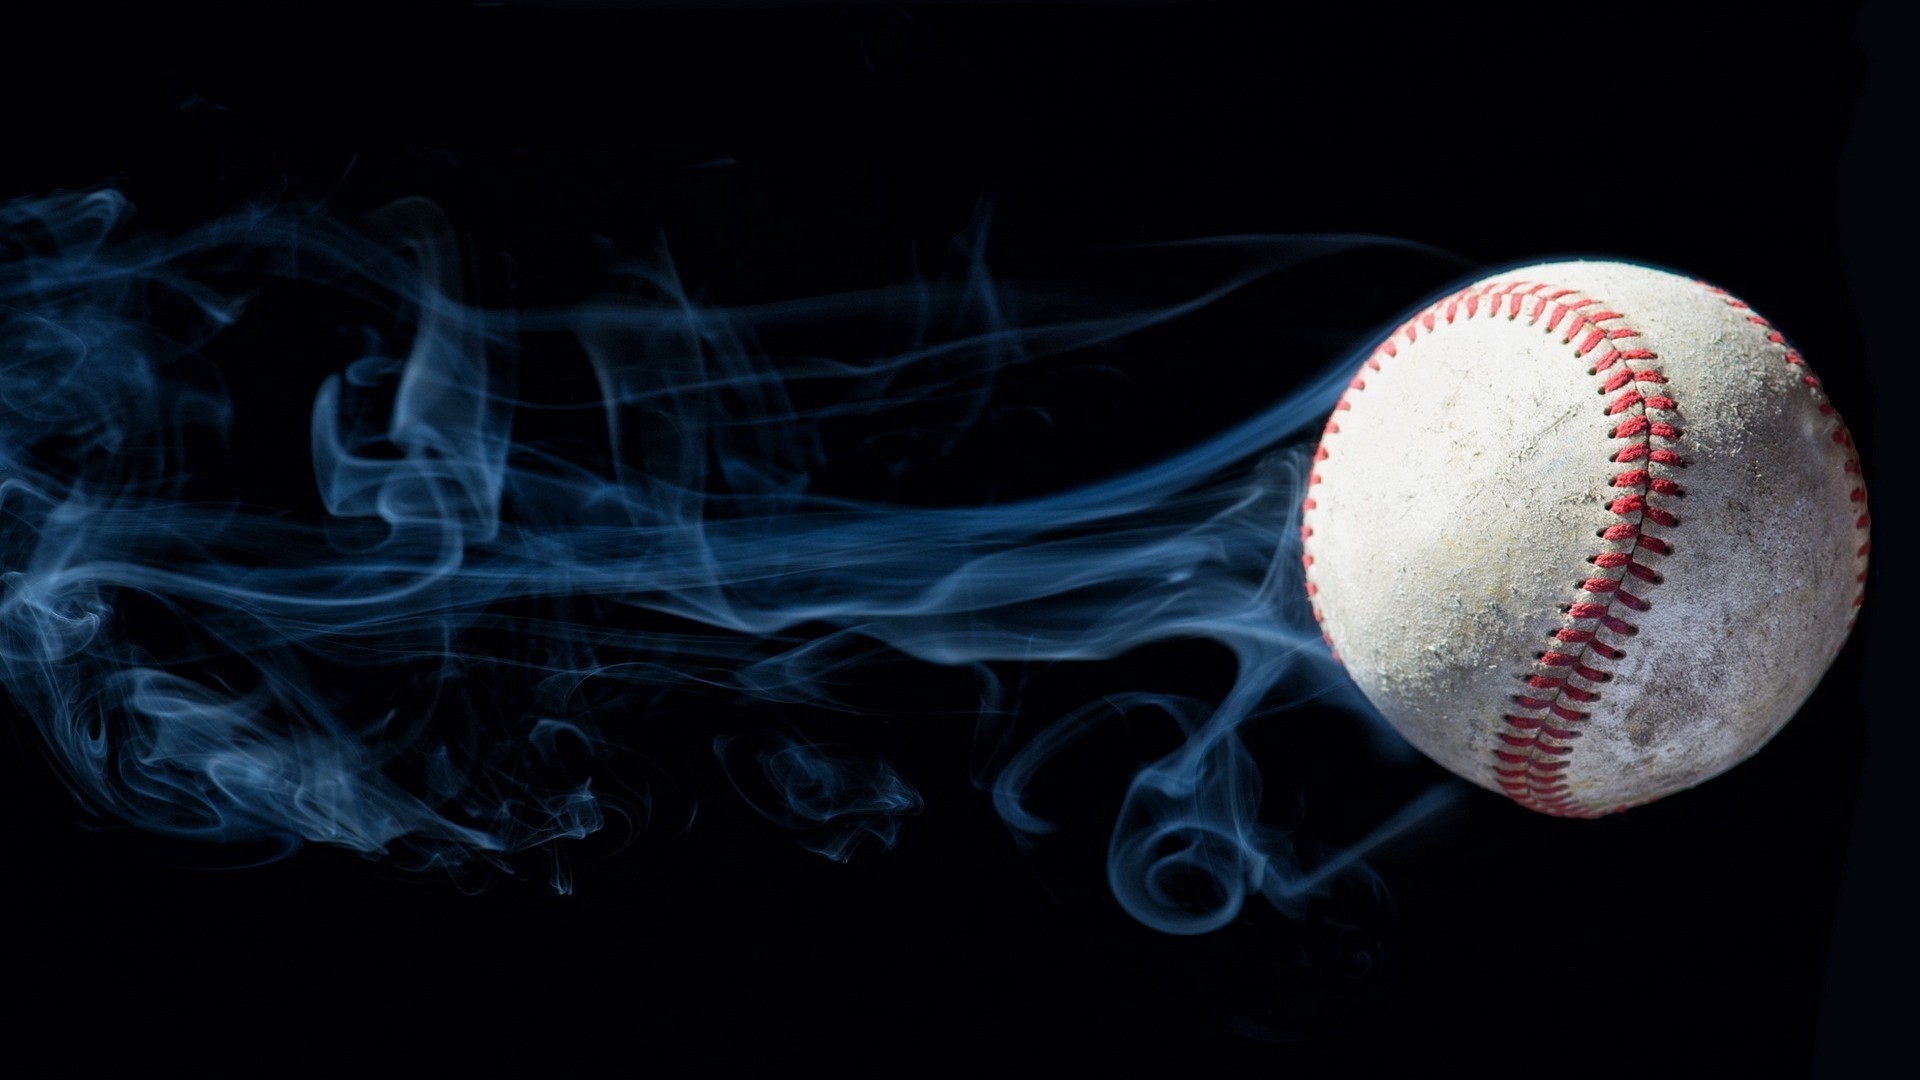 General 1920x1080 baseball smoke photo manipulation ball black background digital art sport closeup